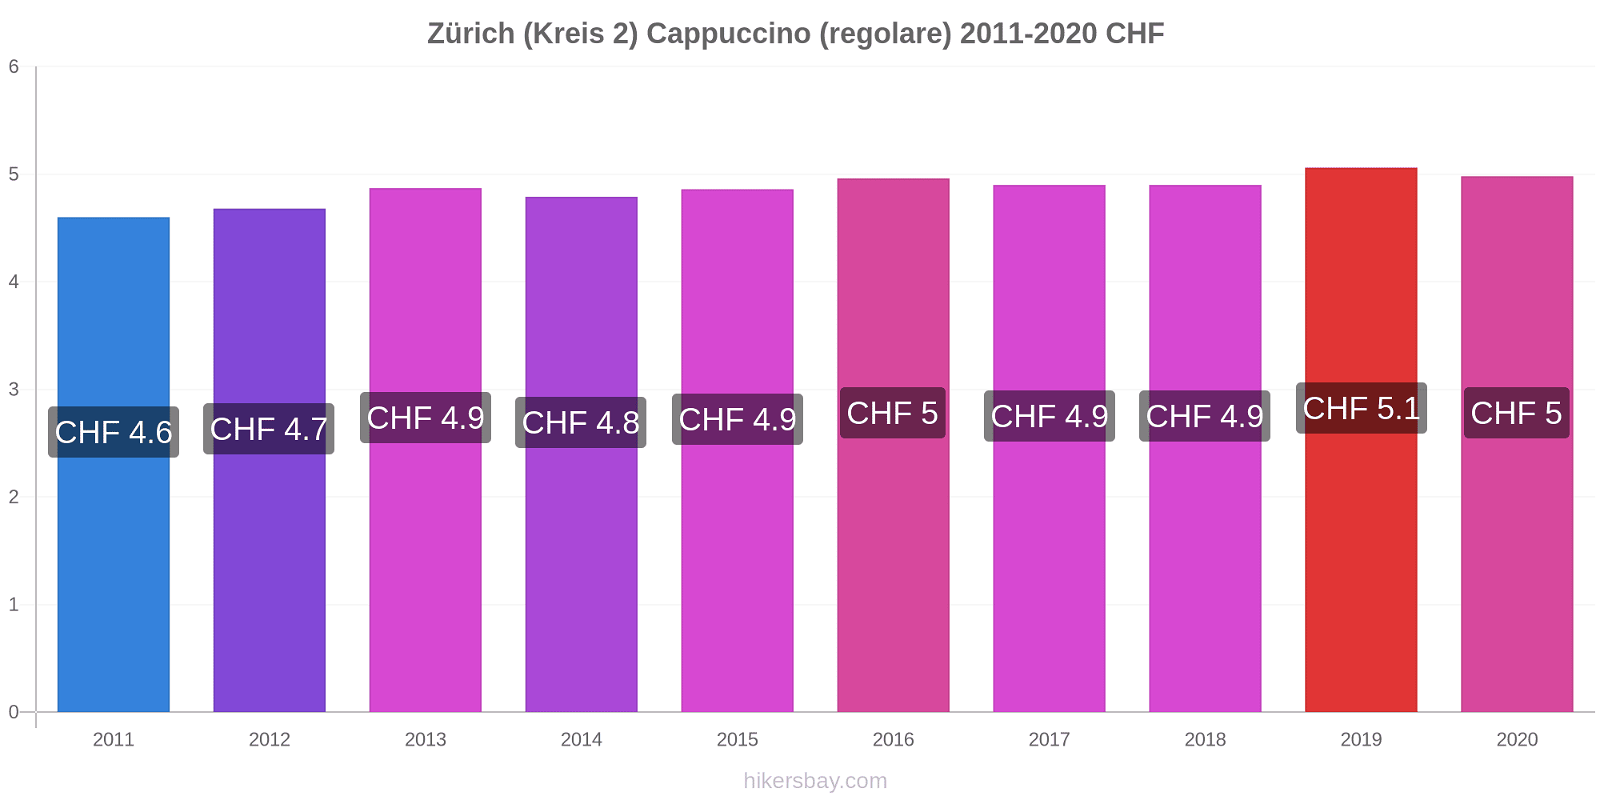 Zürich (Kreis 2) variazioni di prezzo Cappuccino (normale) hikersbay.com